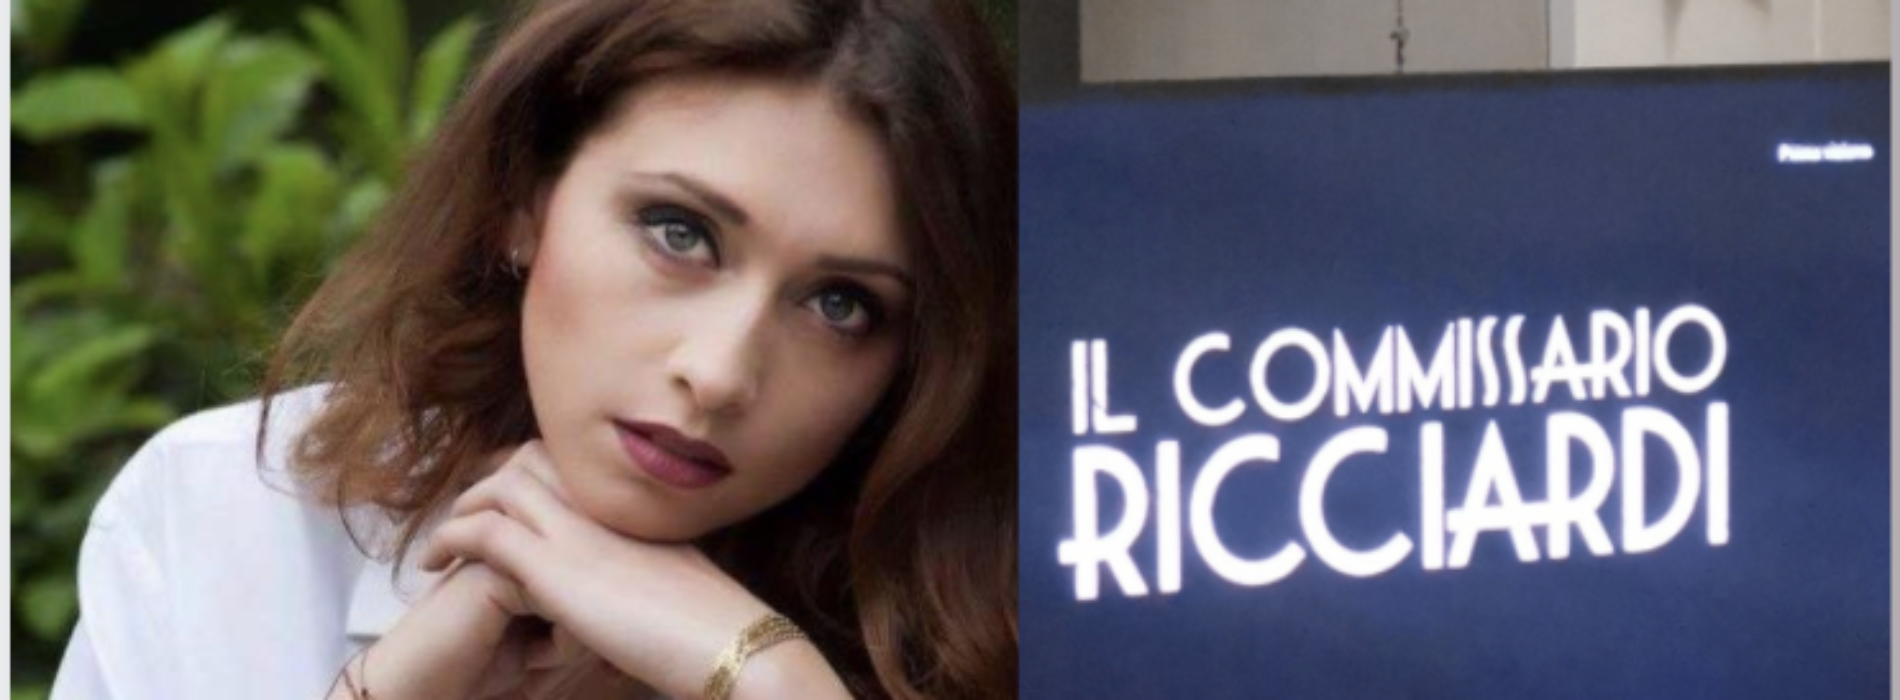 Una casertana dal Commissario Ricciardi, è Rossella Di Lucca